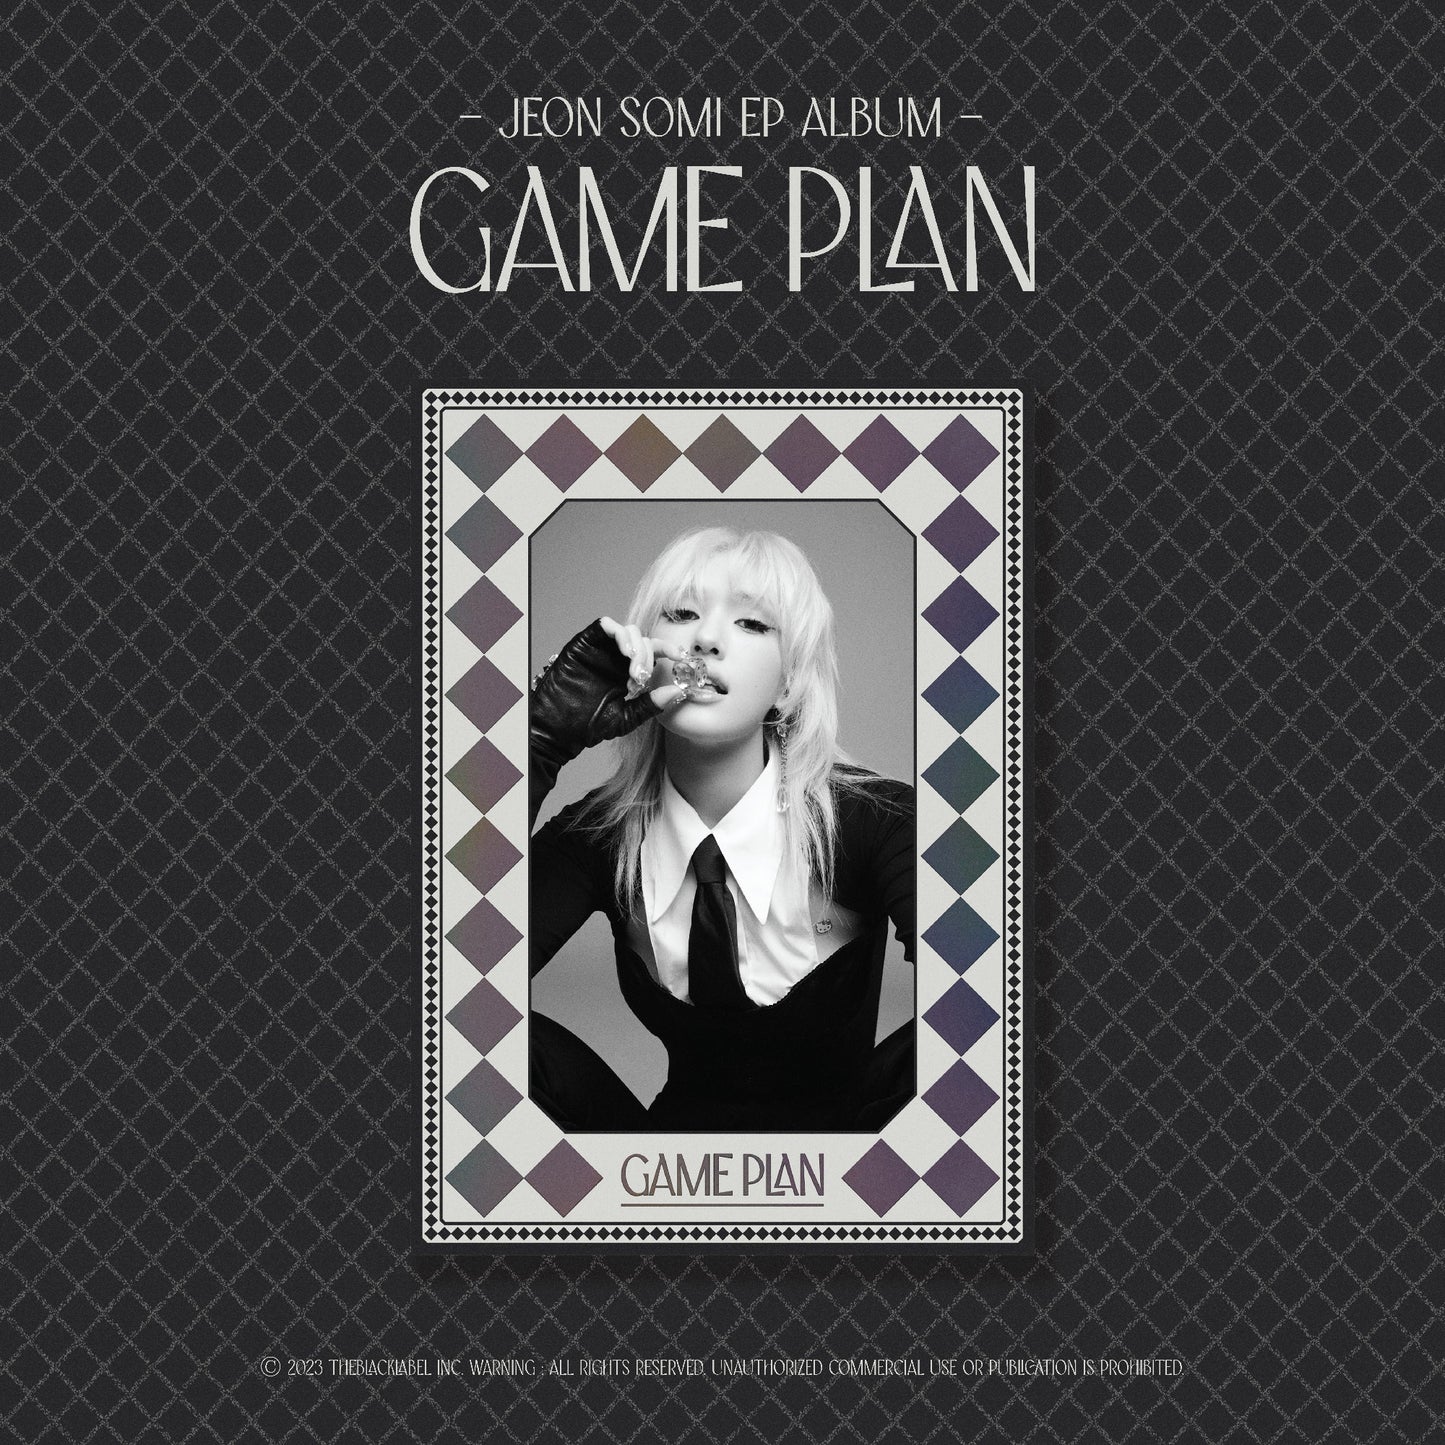 JEON SOMI EP ALBUM 'GAME PLAN' (PHOTOBOOK) BLACK VERSION COVER